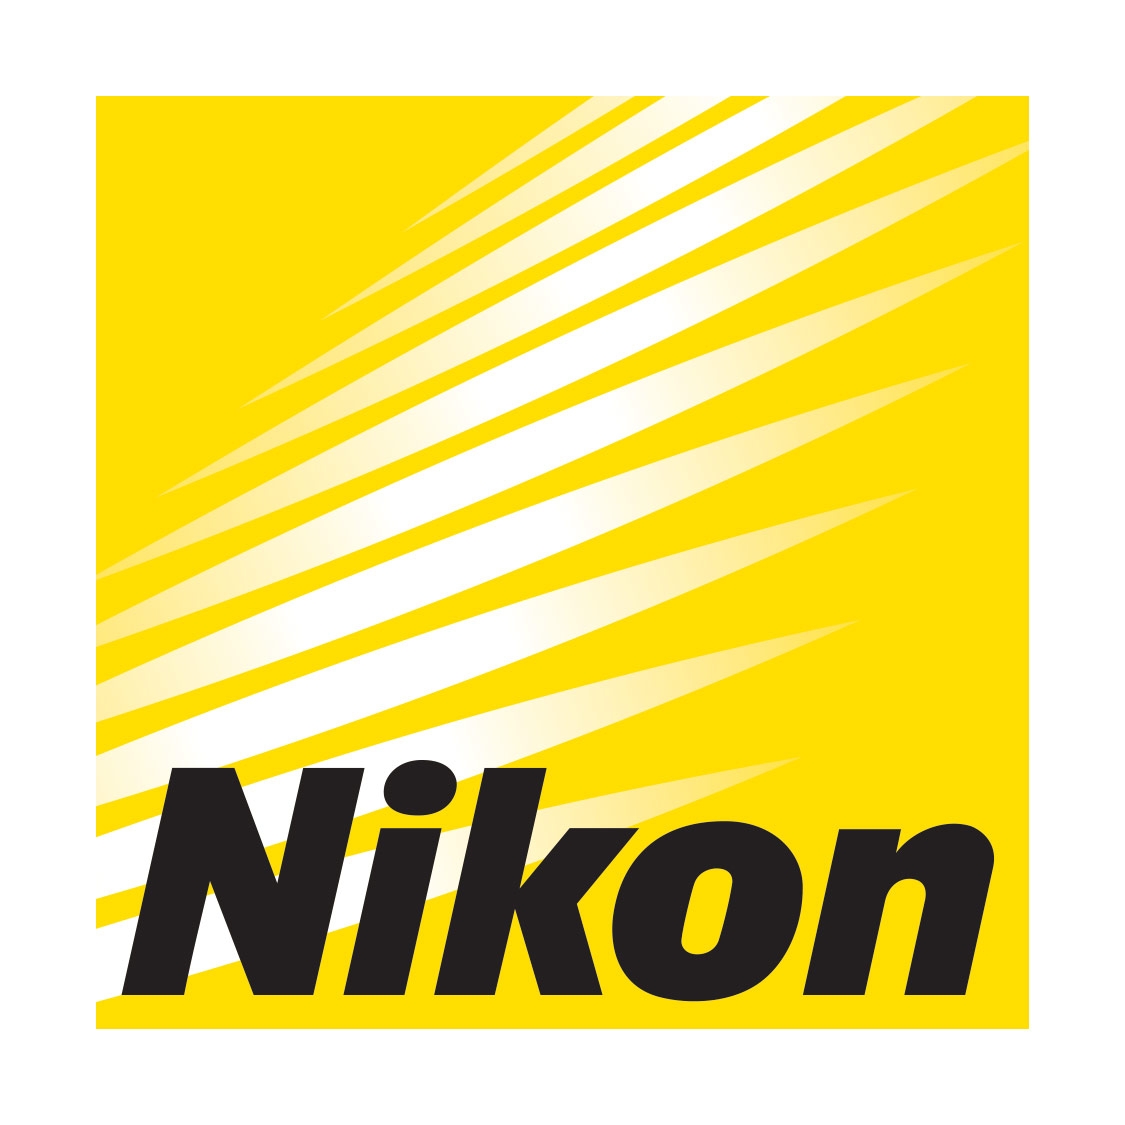 Nikon 20-45x MC Eyepiece